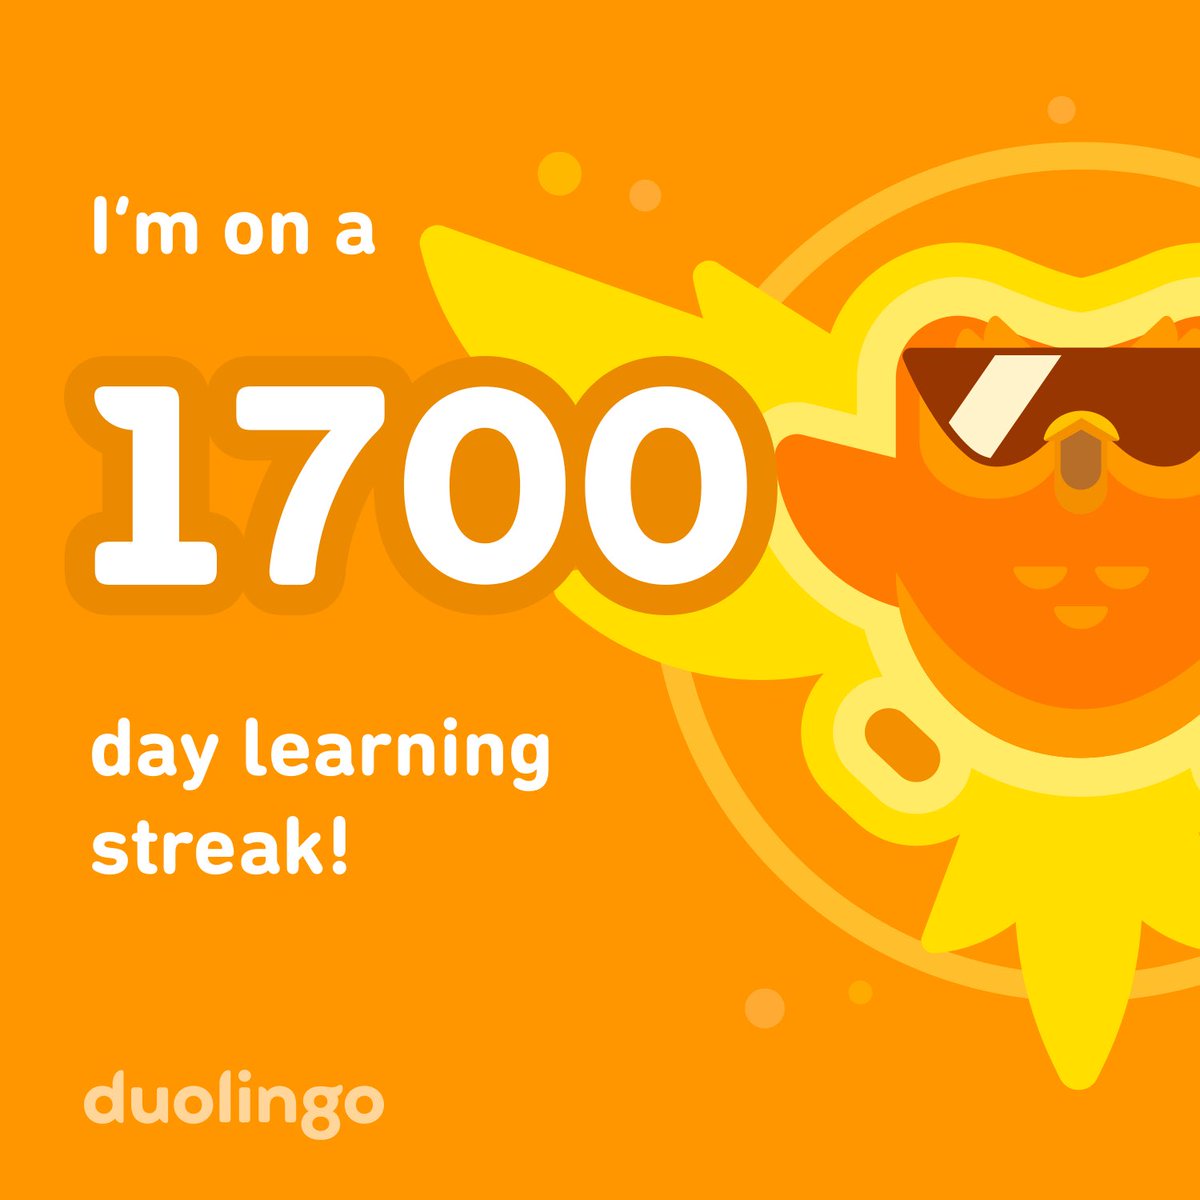 1700 day streak on @duolingo!